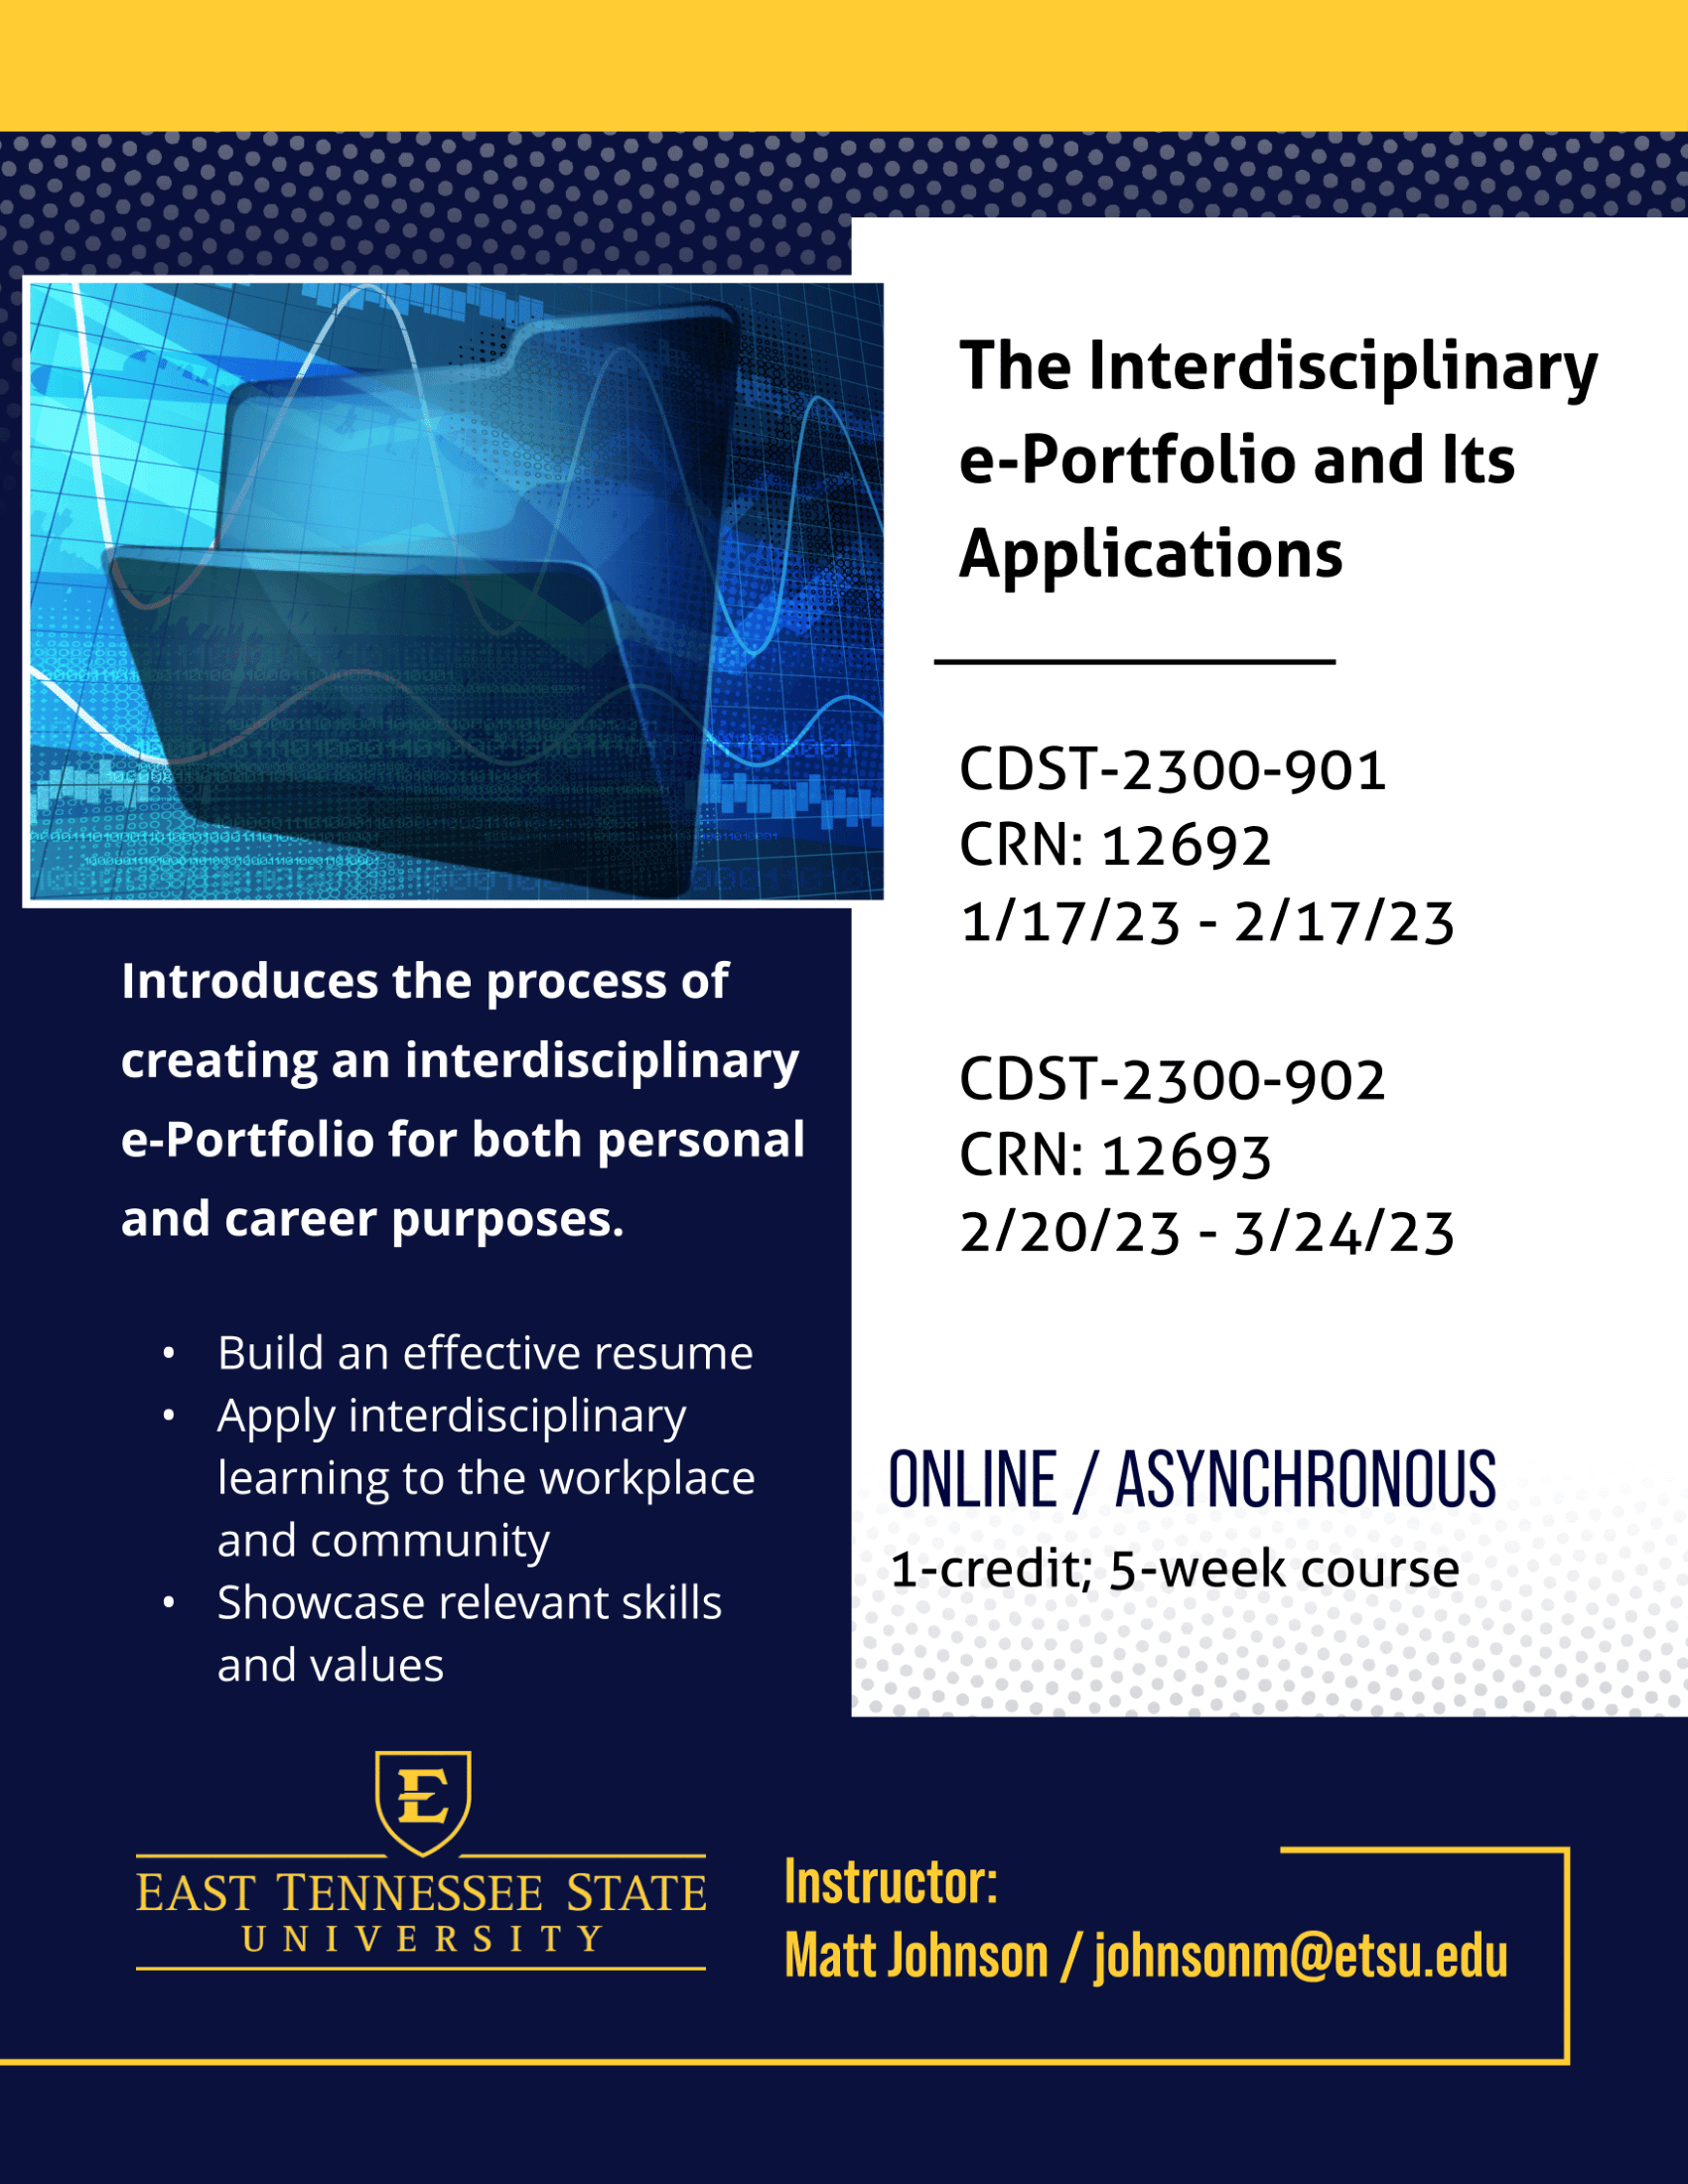 CDST 2300: The Interdisciplinary e-Portfolio and Its Applications